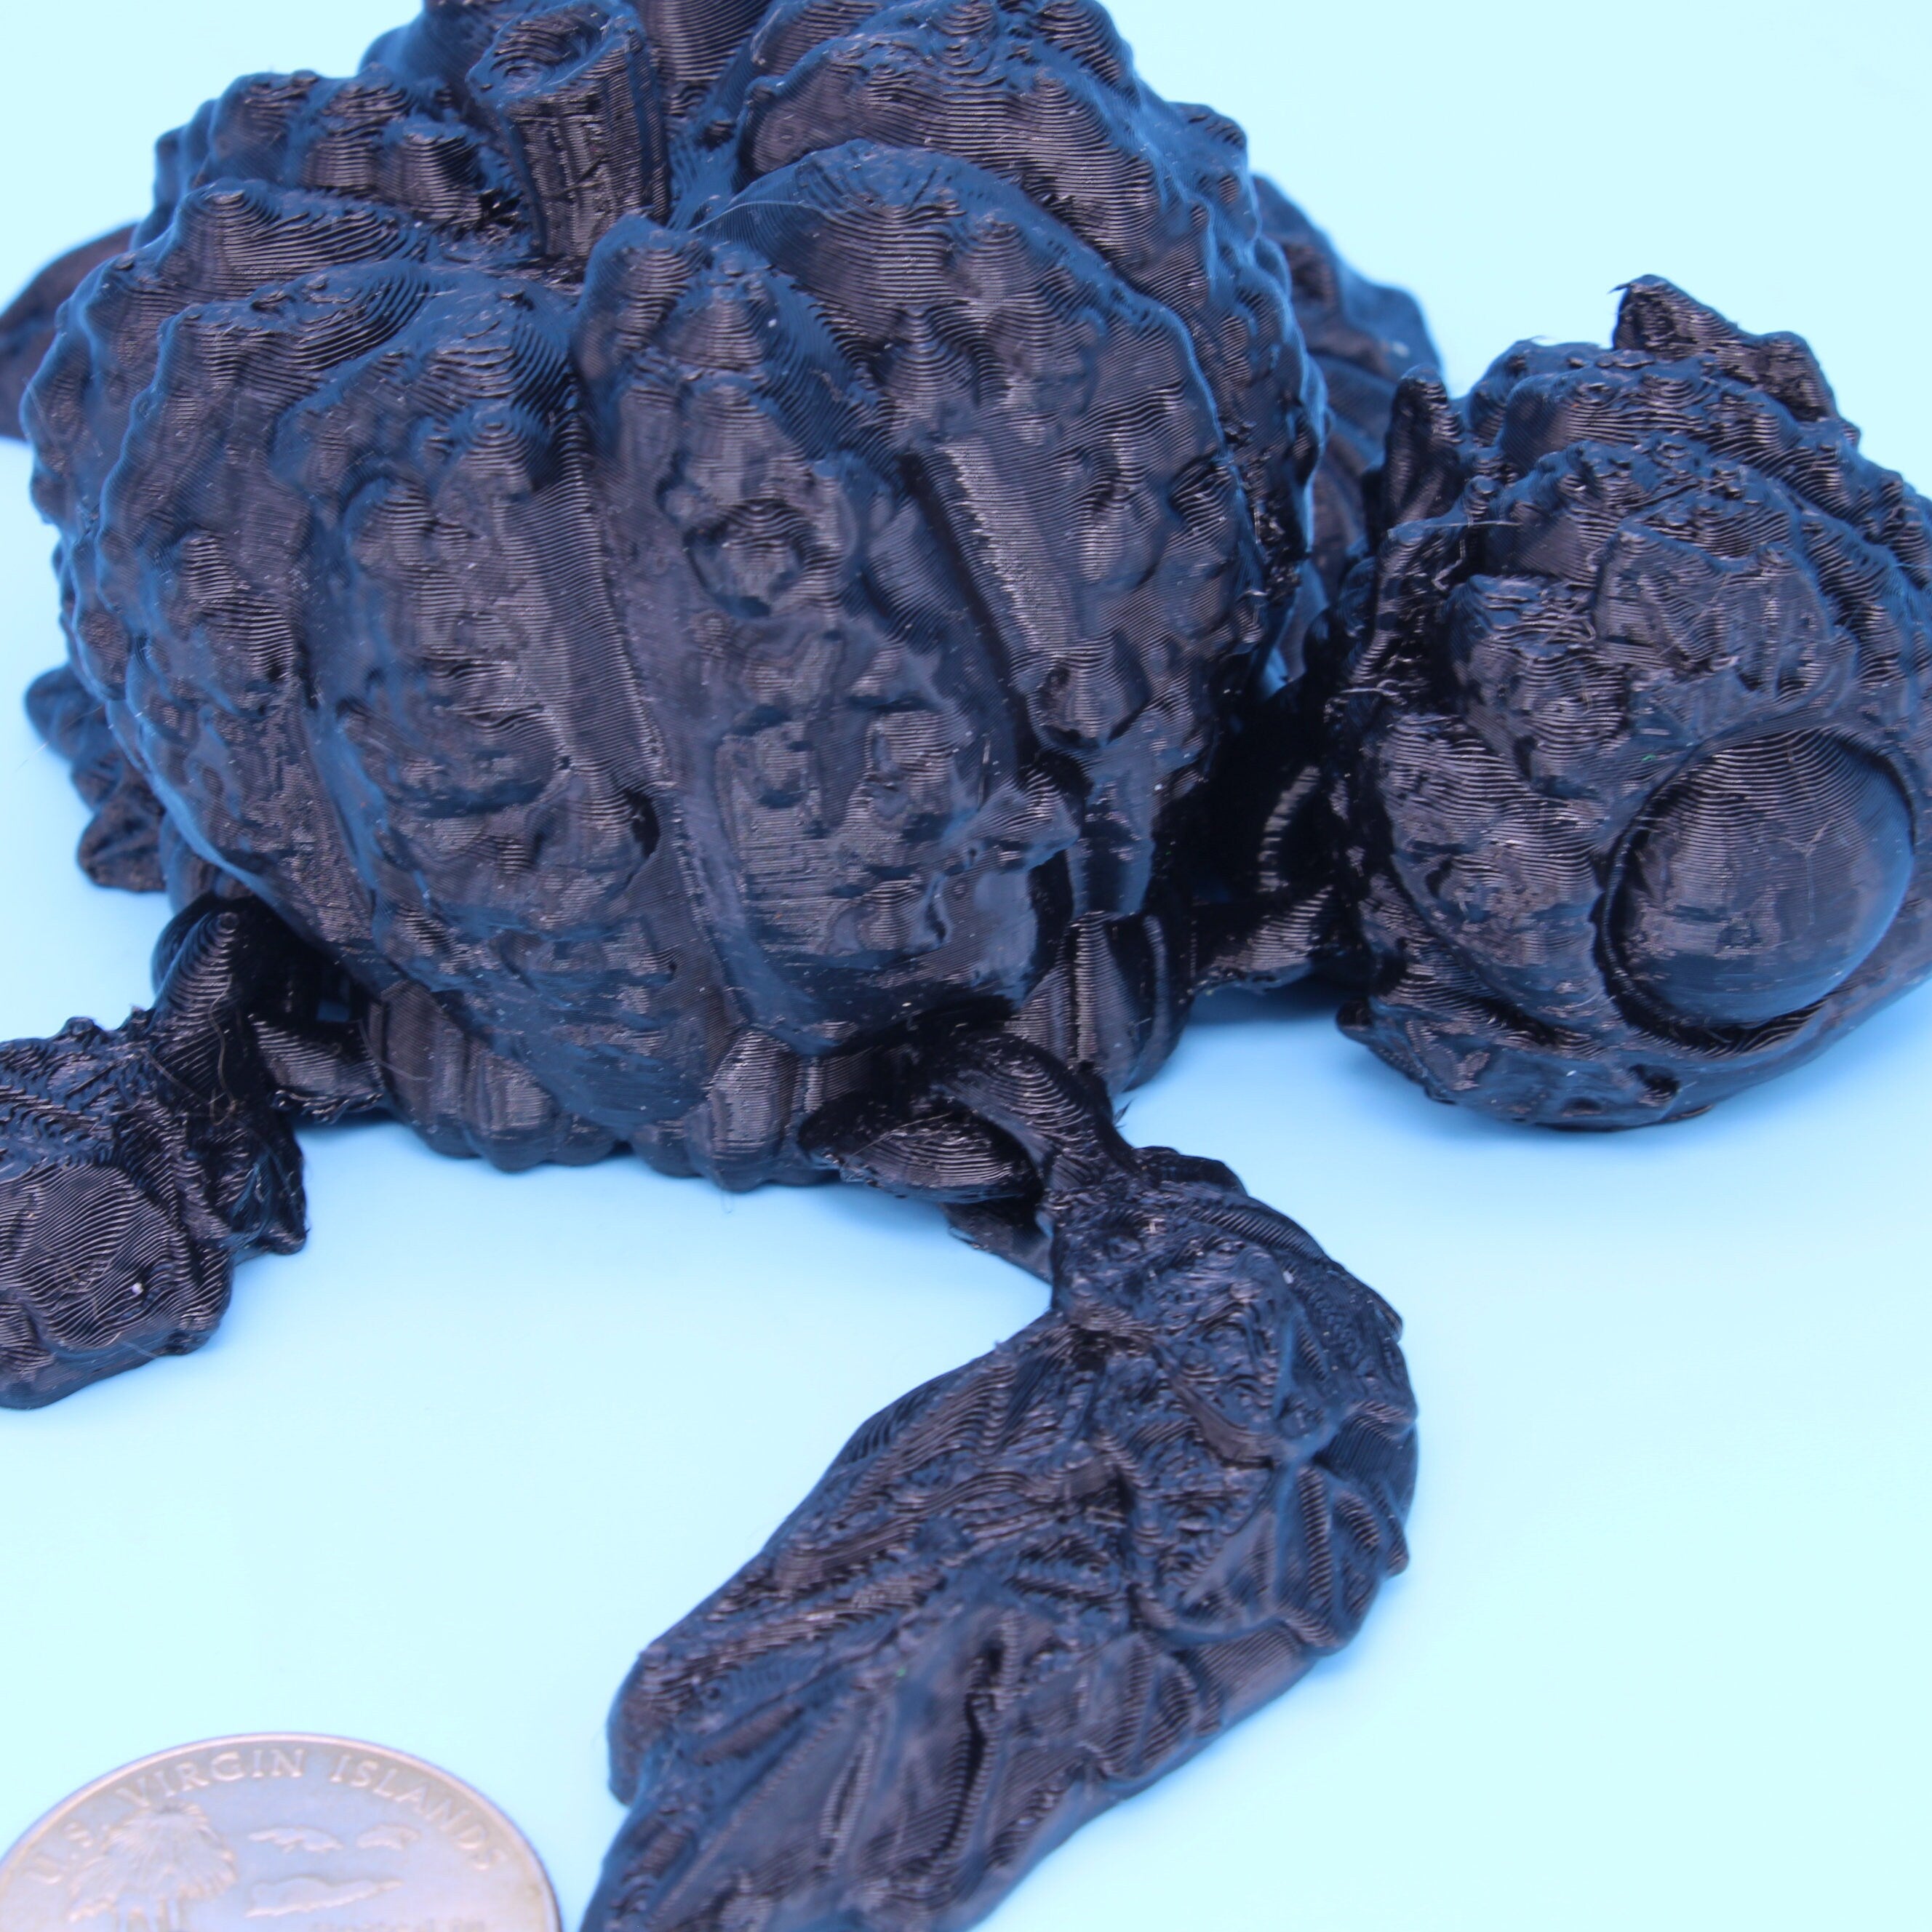 Pumpkin Turtle- Black Bumpkinurtle 4.5 inch. 3D Printed TPU